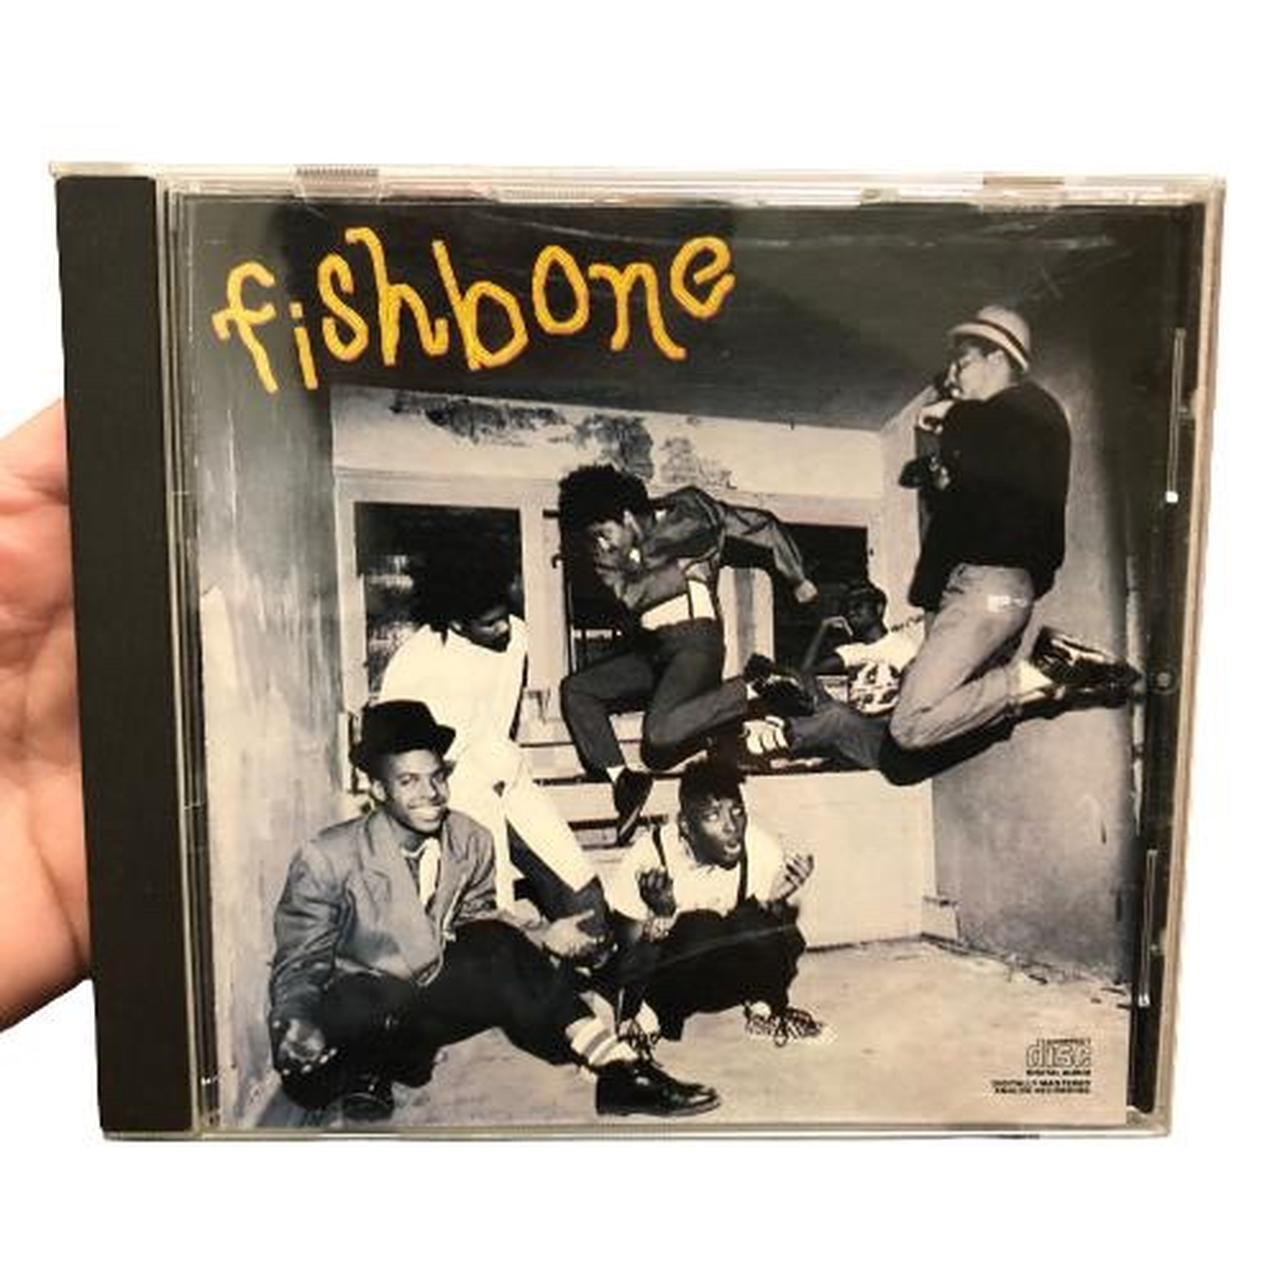 1985 Fishbone EP - CD #rock #reggae #ska #funk #punk - Depop